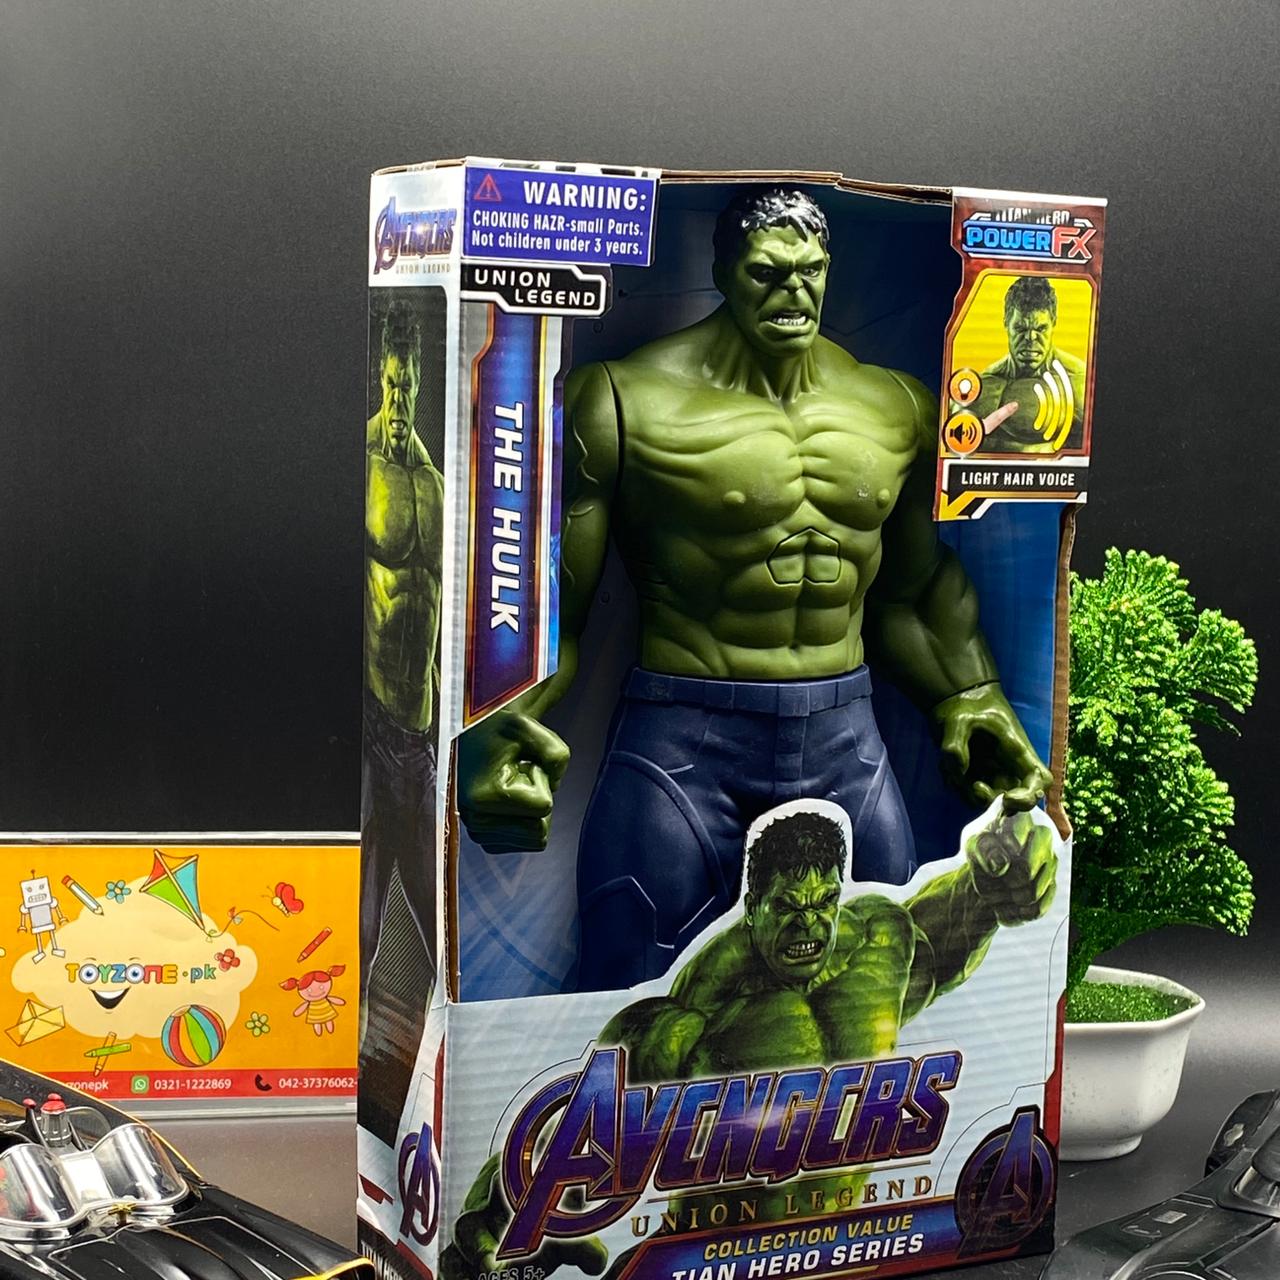 avengers titan hero hulk